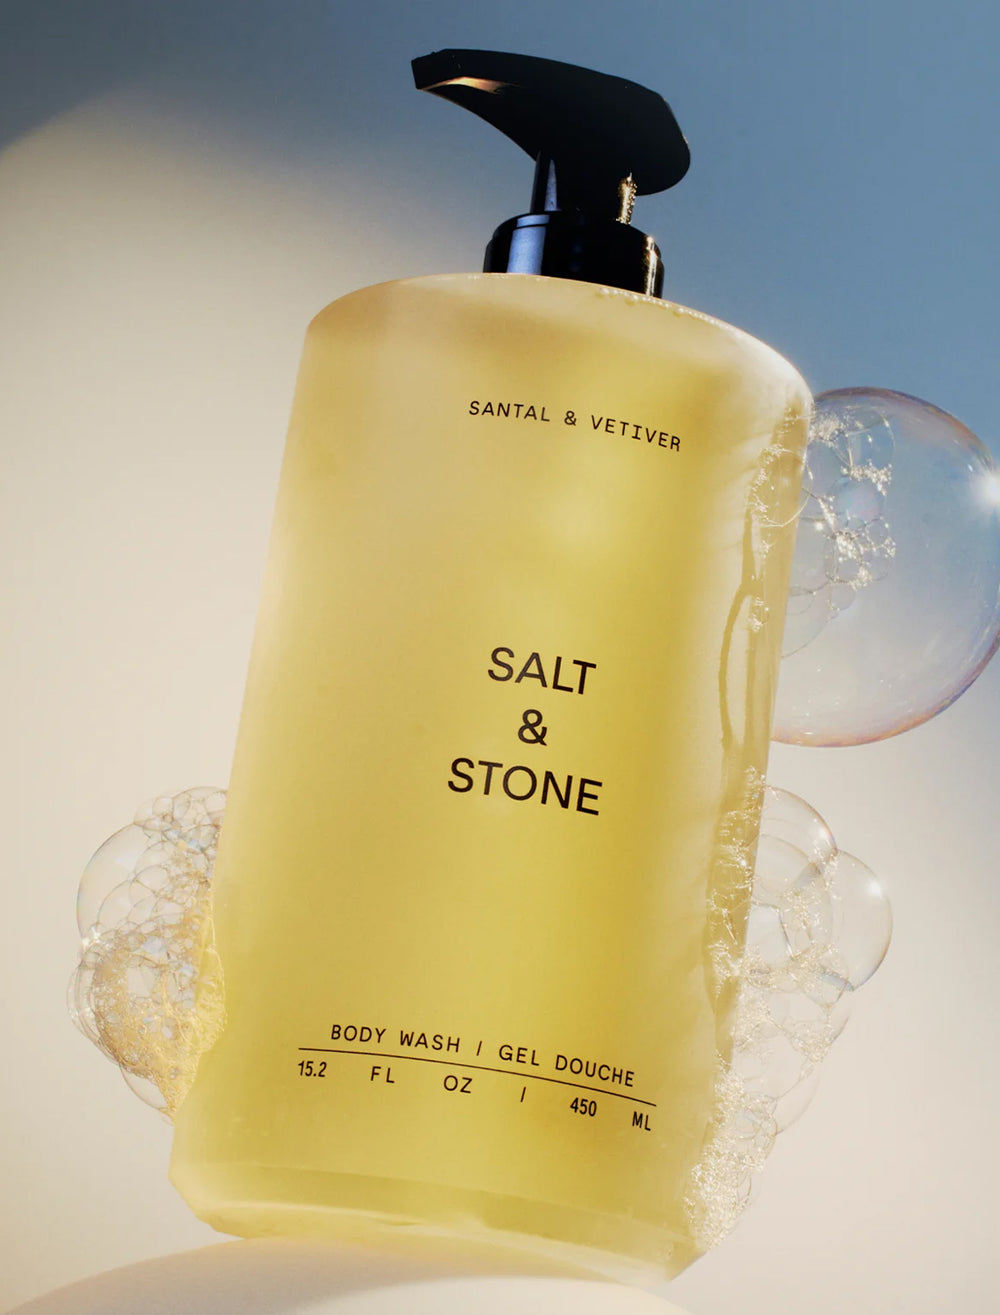 Salt & Stone's body wash | santal & vetiver.